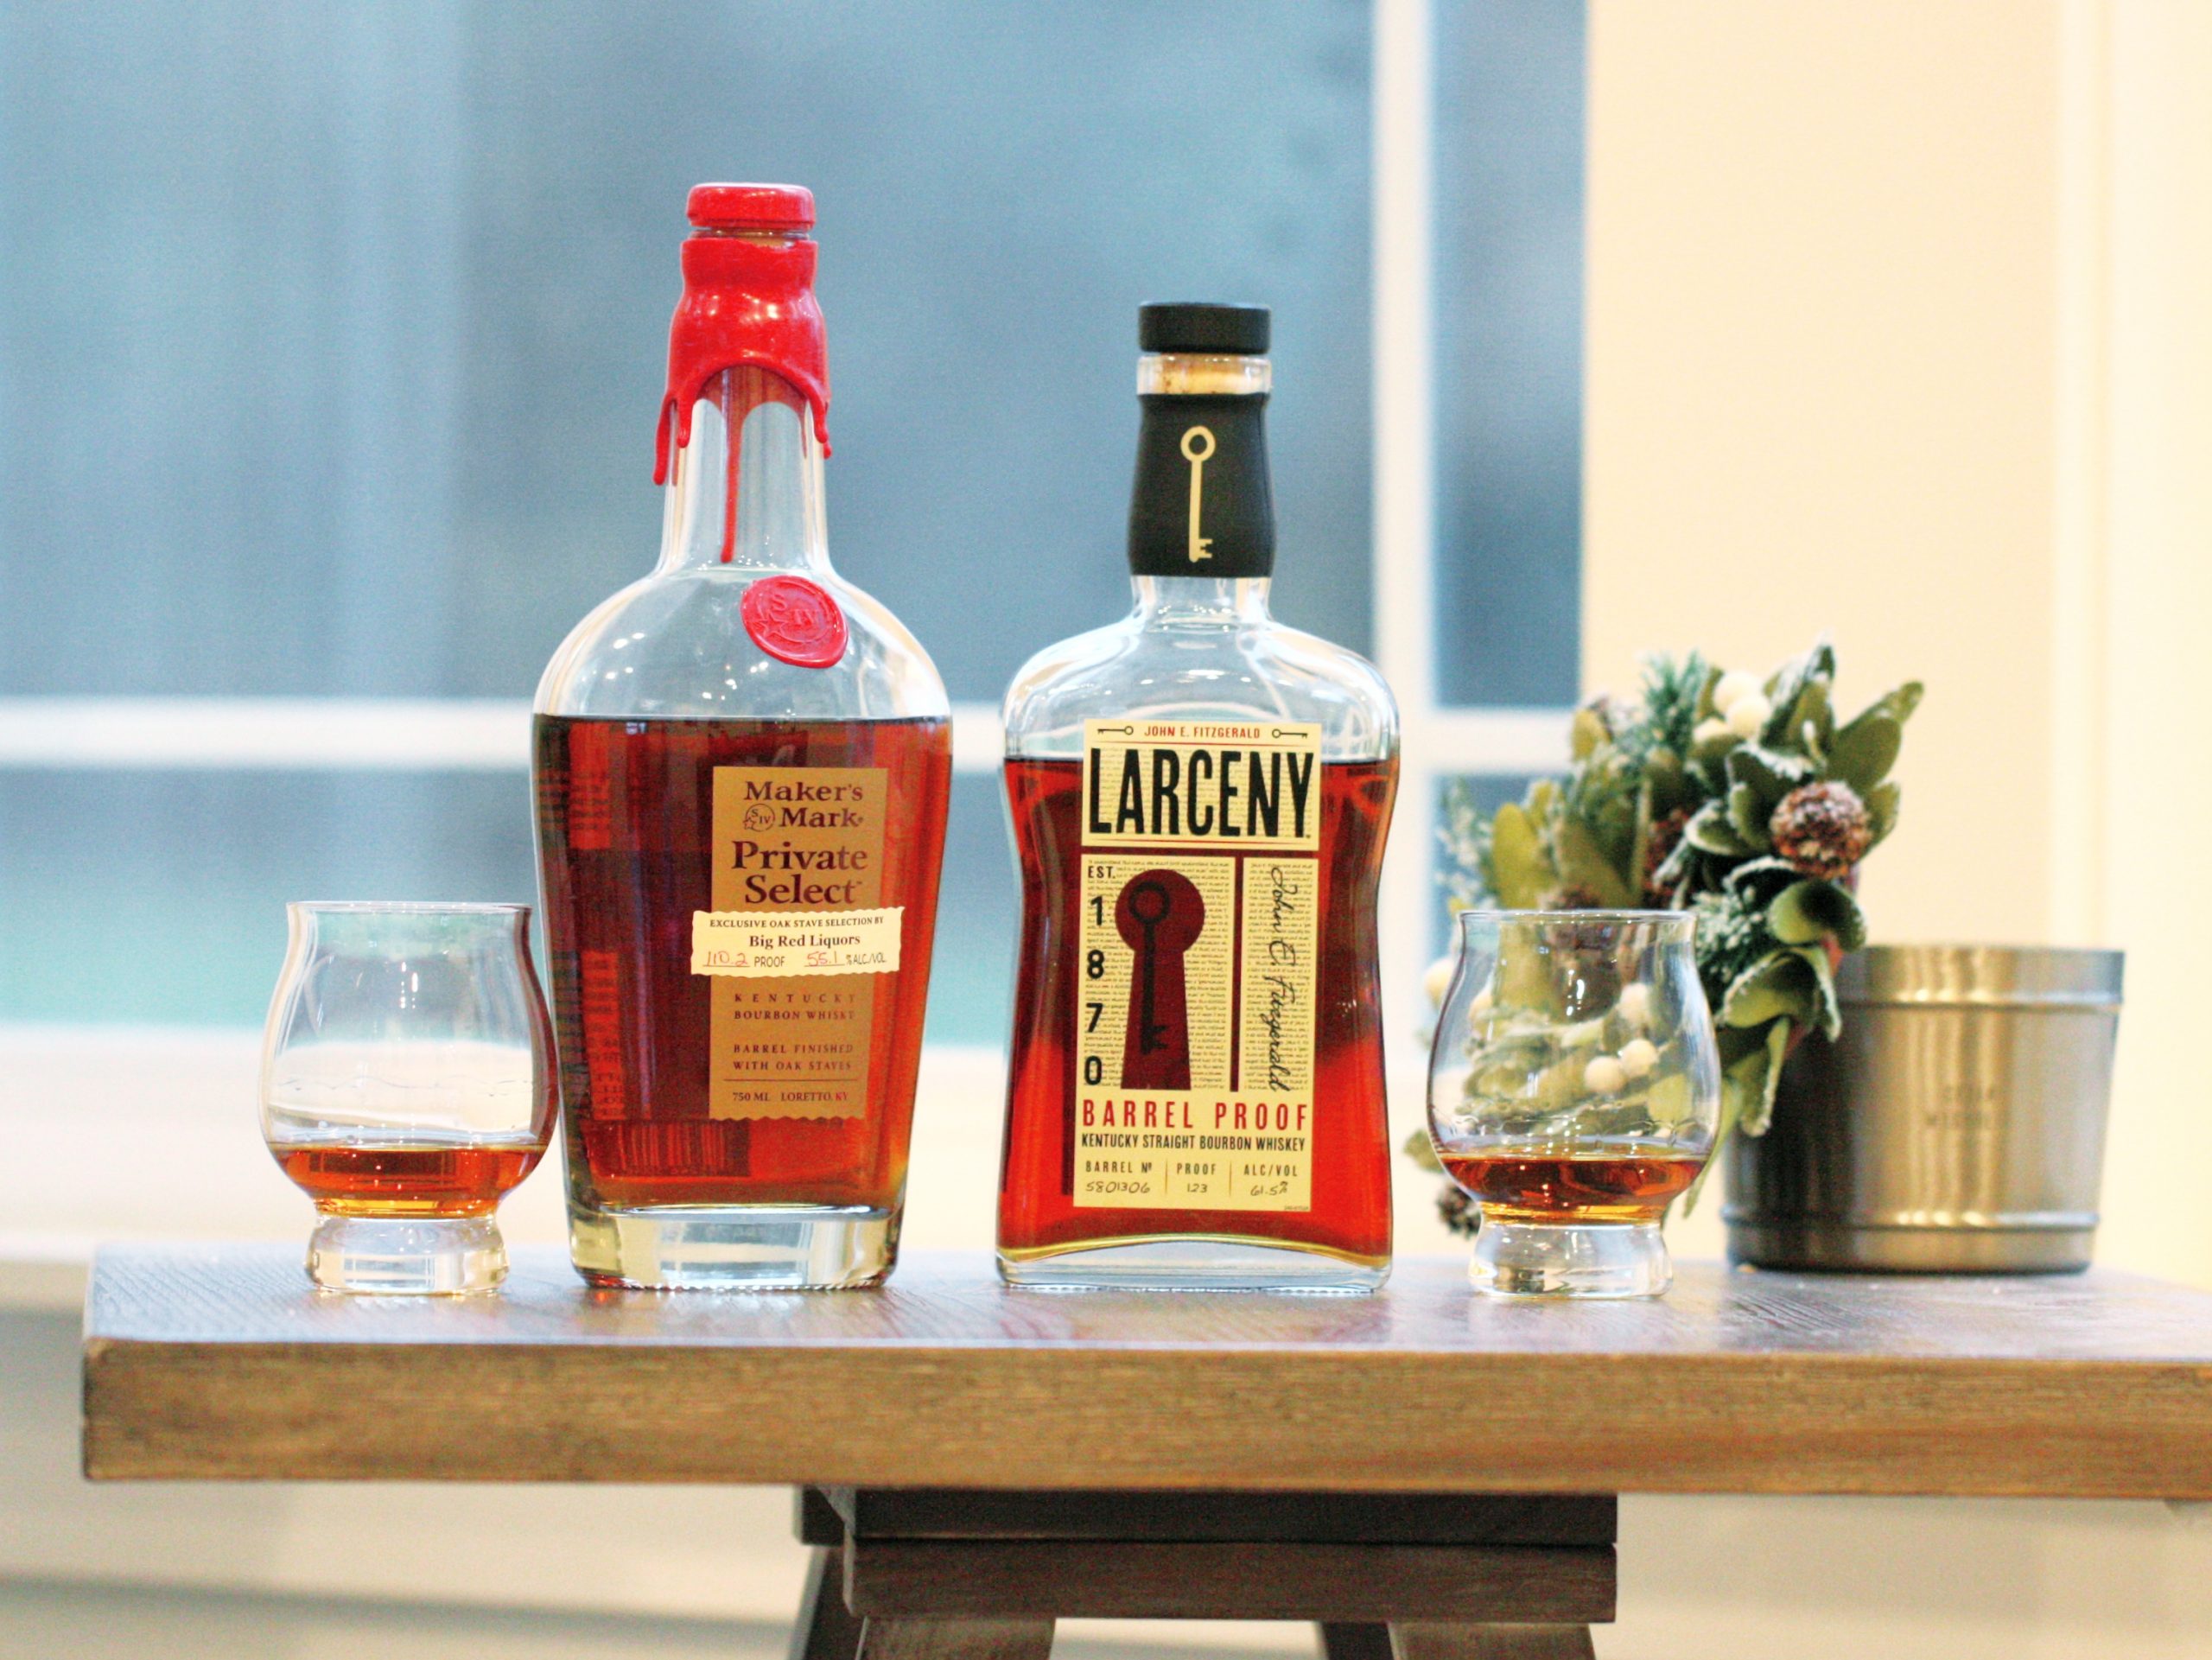 Larceny Single Barrel Barrel Proof Bourbon vs. Maker’s Mark Private Select